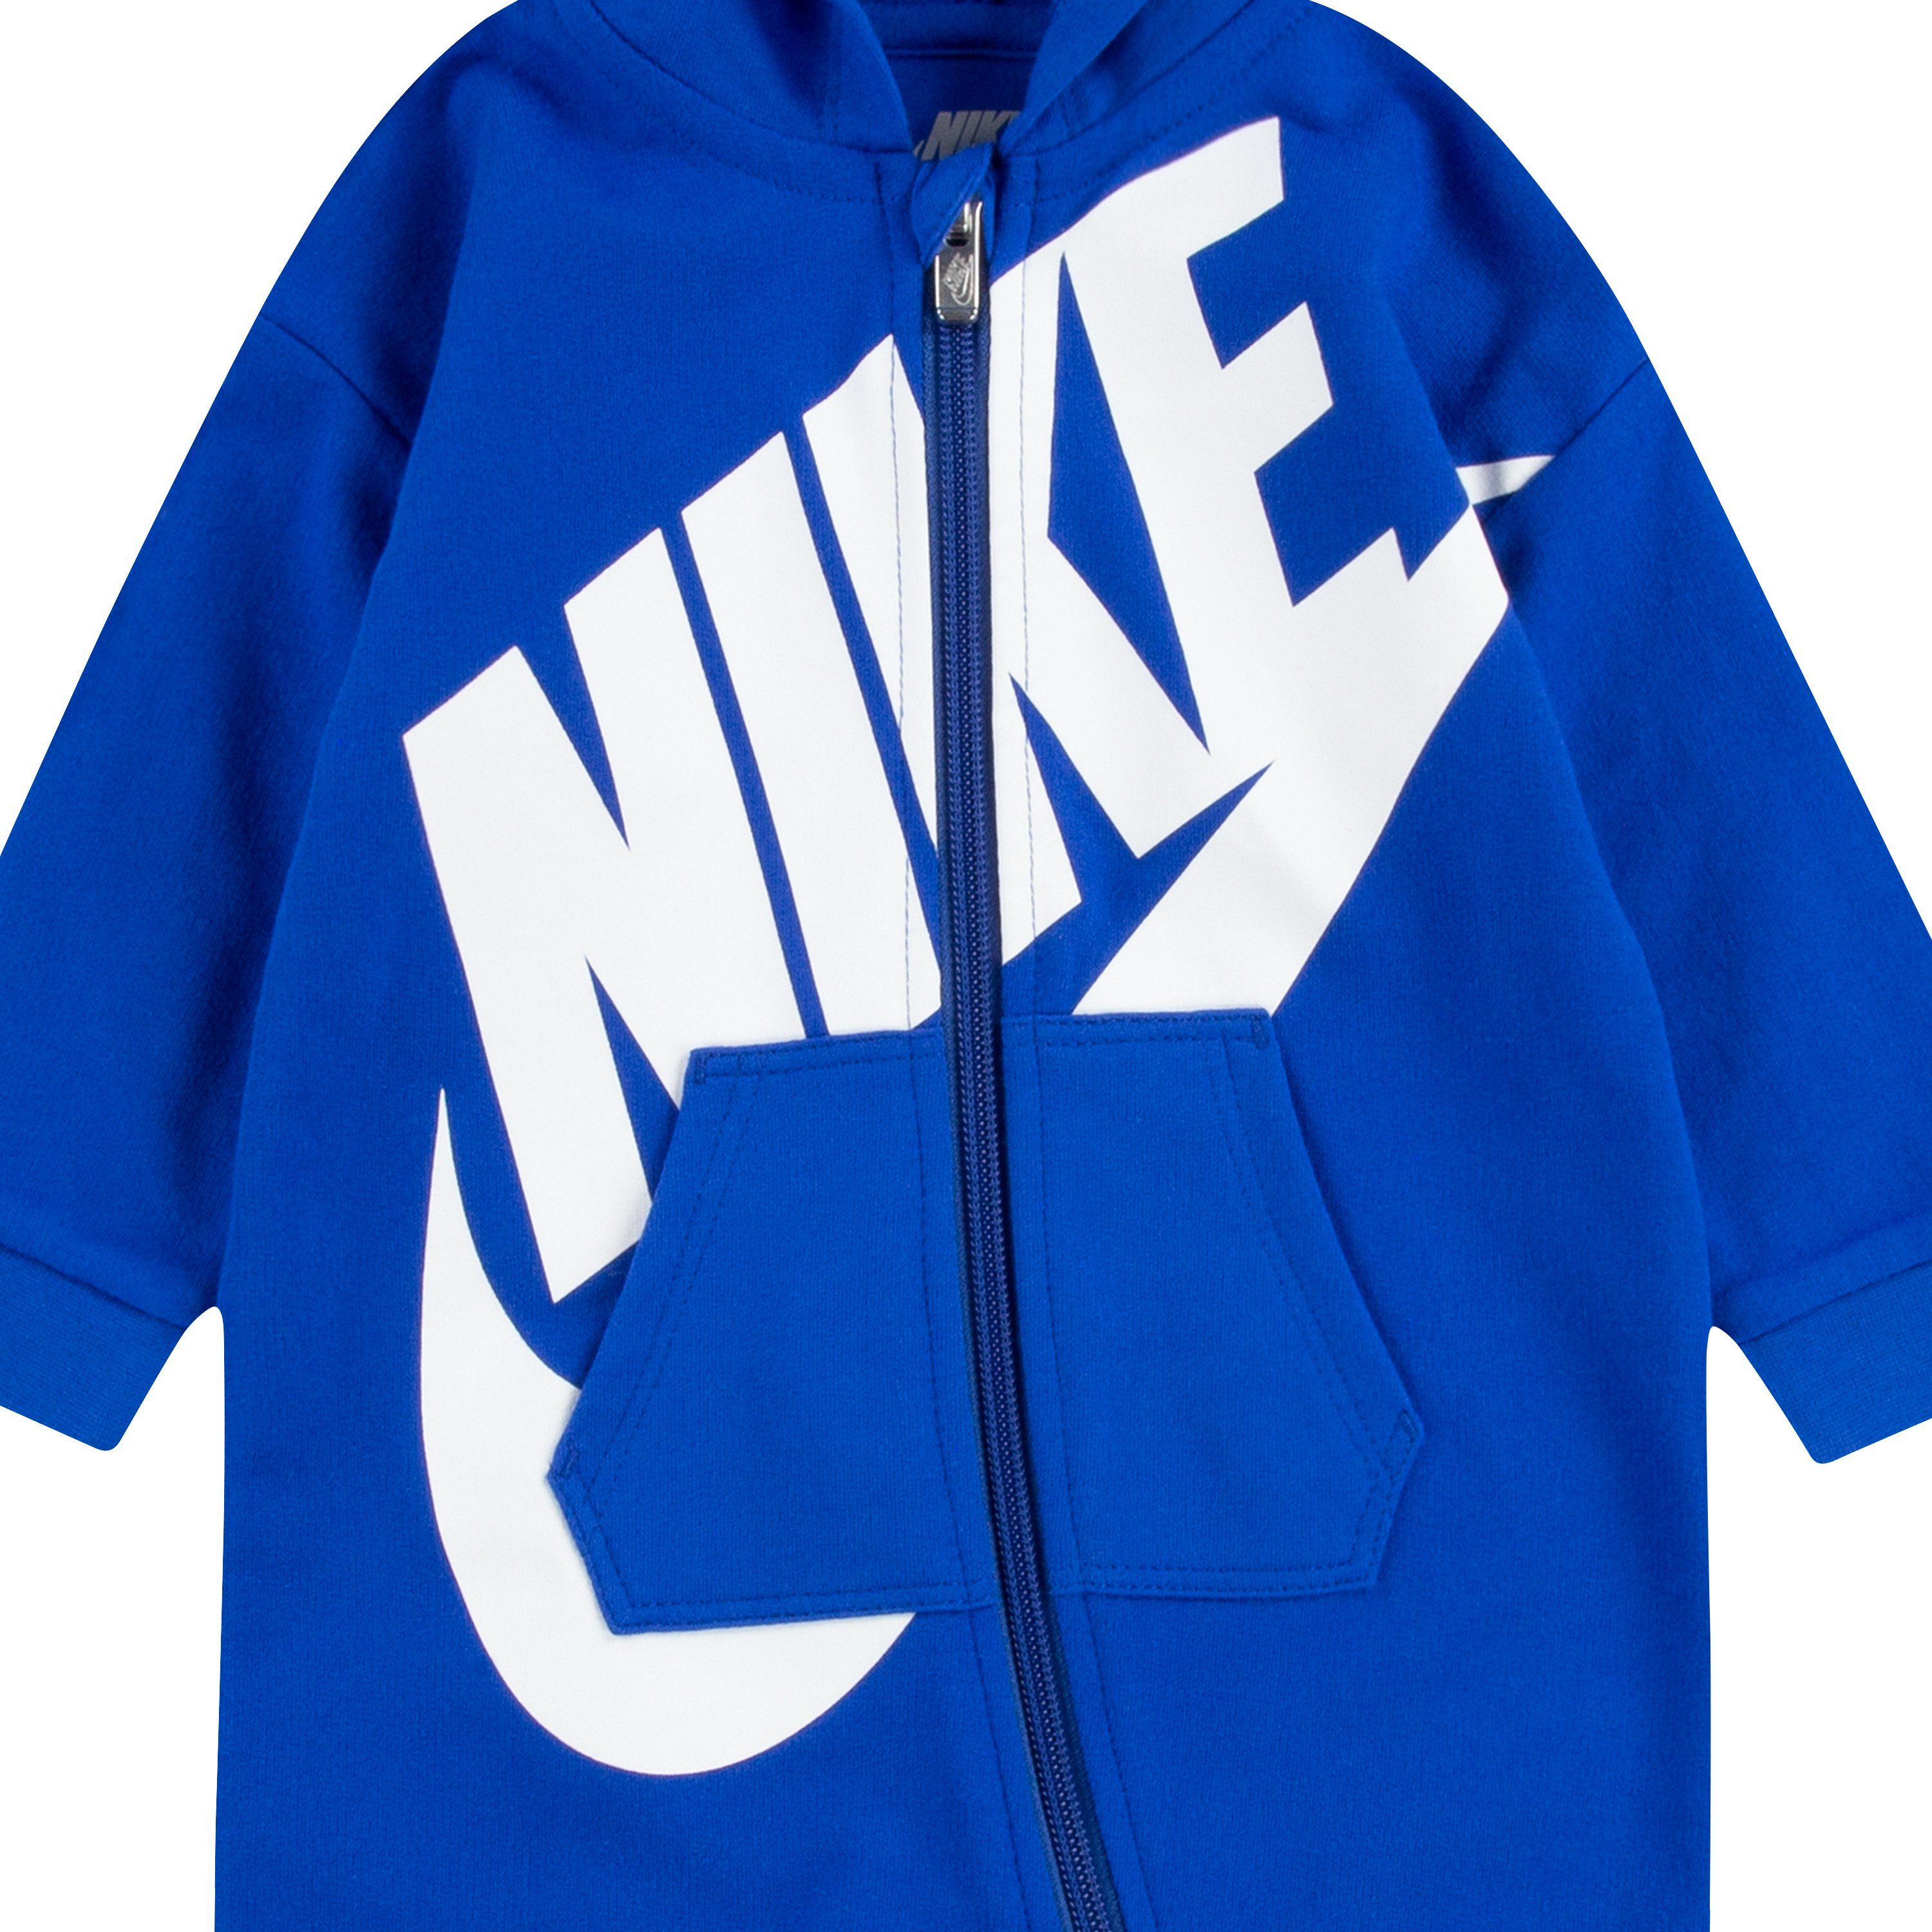 Nike Sportswear NKN COVERALL PLAY DAY Strampler ALL blau-weiß